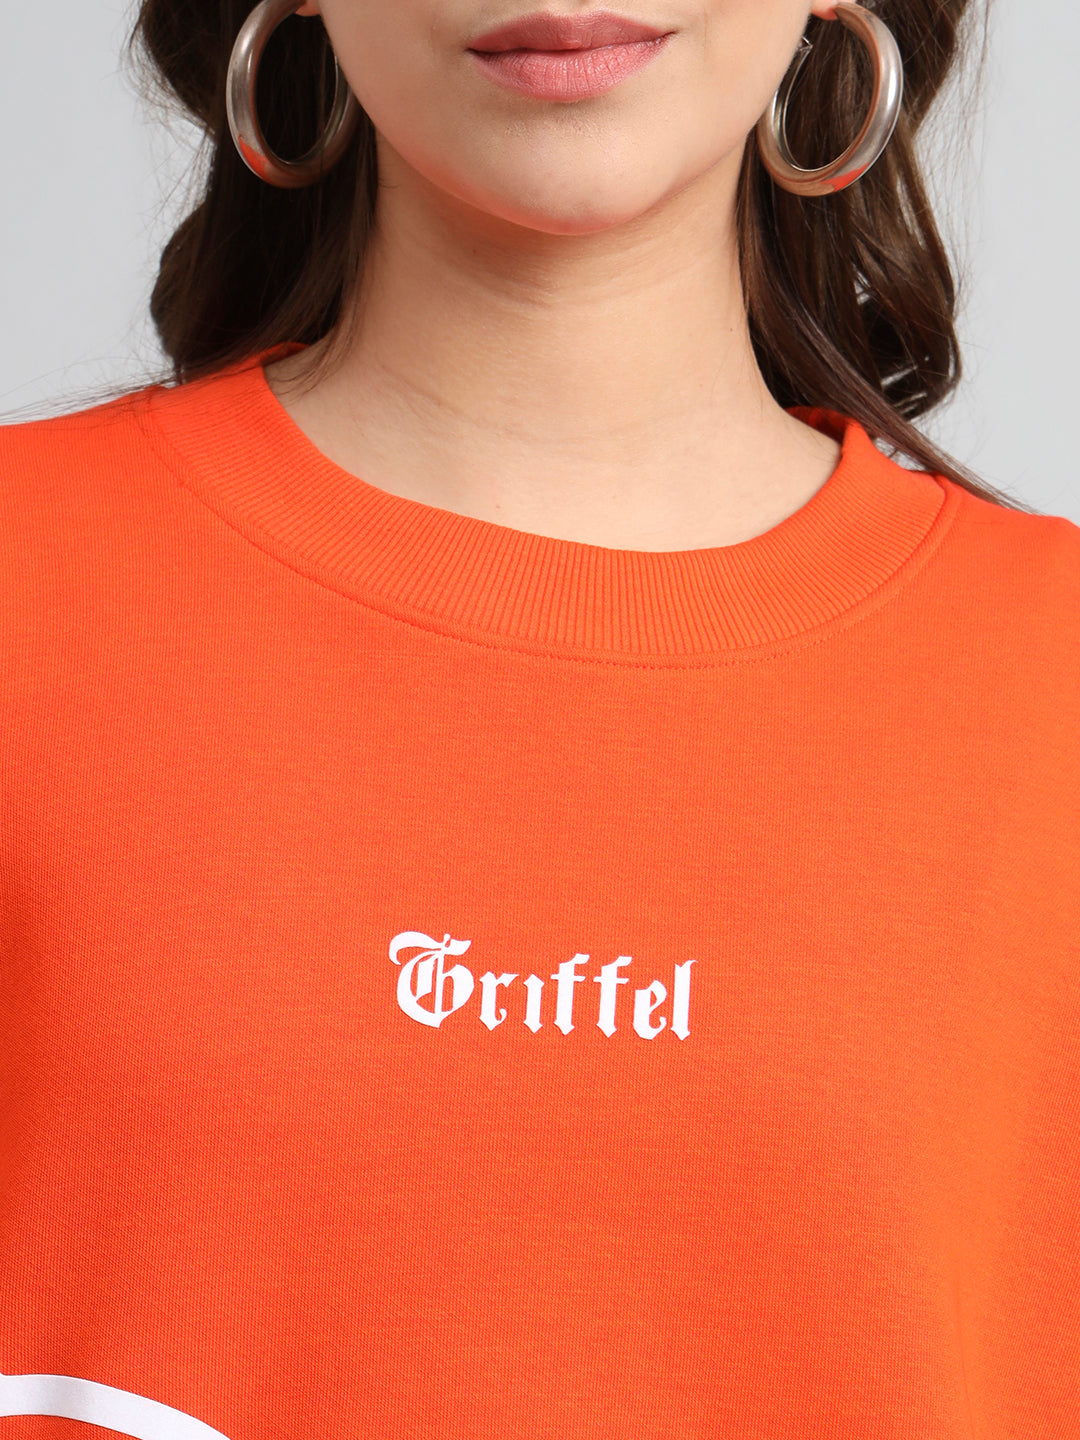 Griffel Women's Black Teddy Print Oversized Round Neck 100% Cotton Fleece Sweatshirt